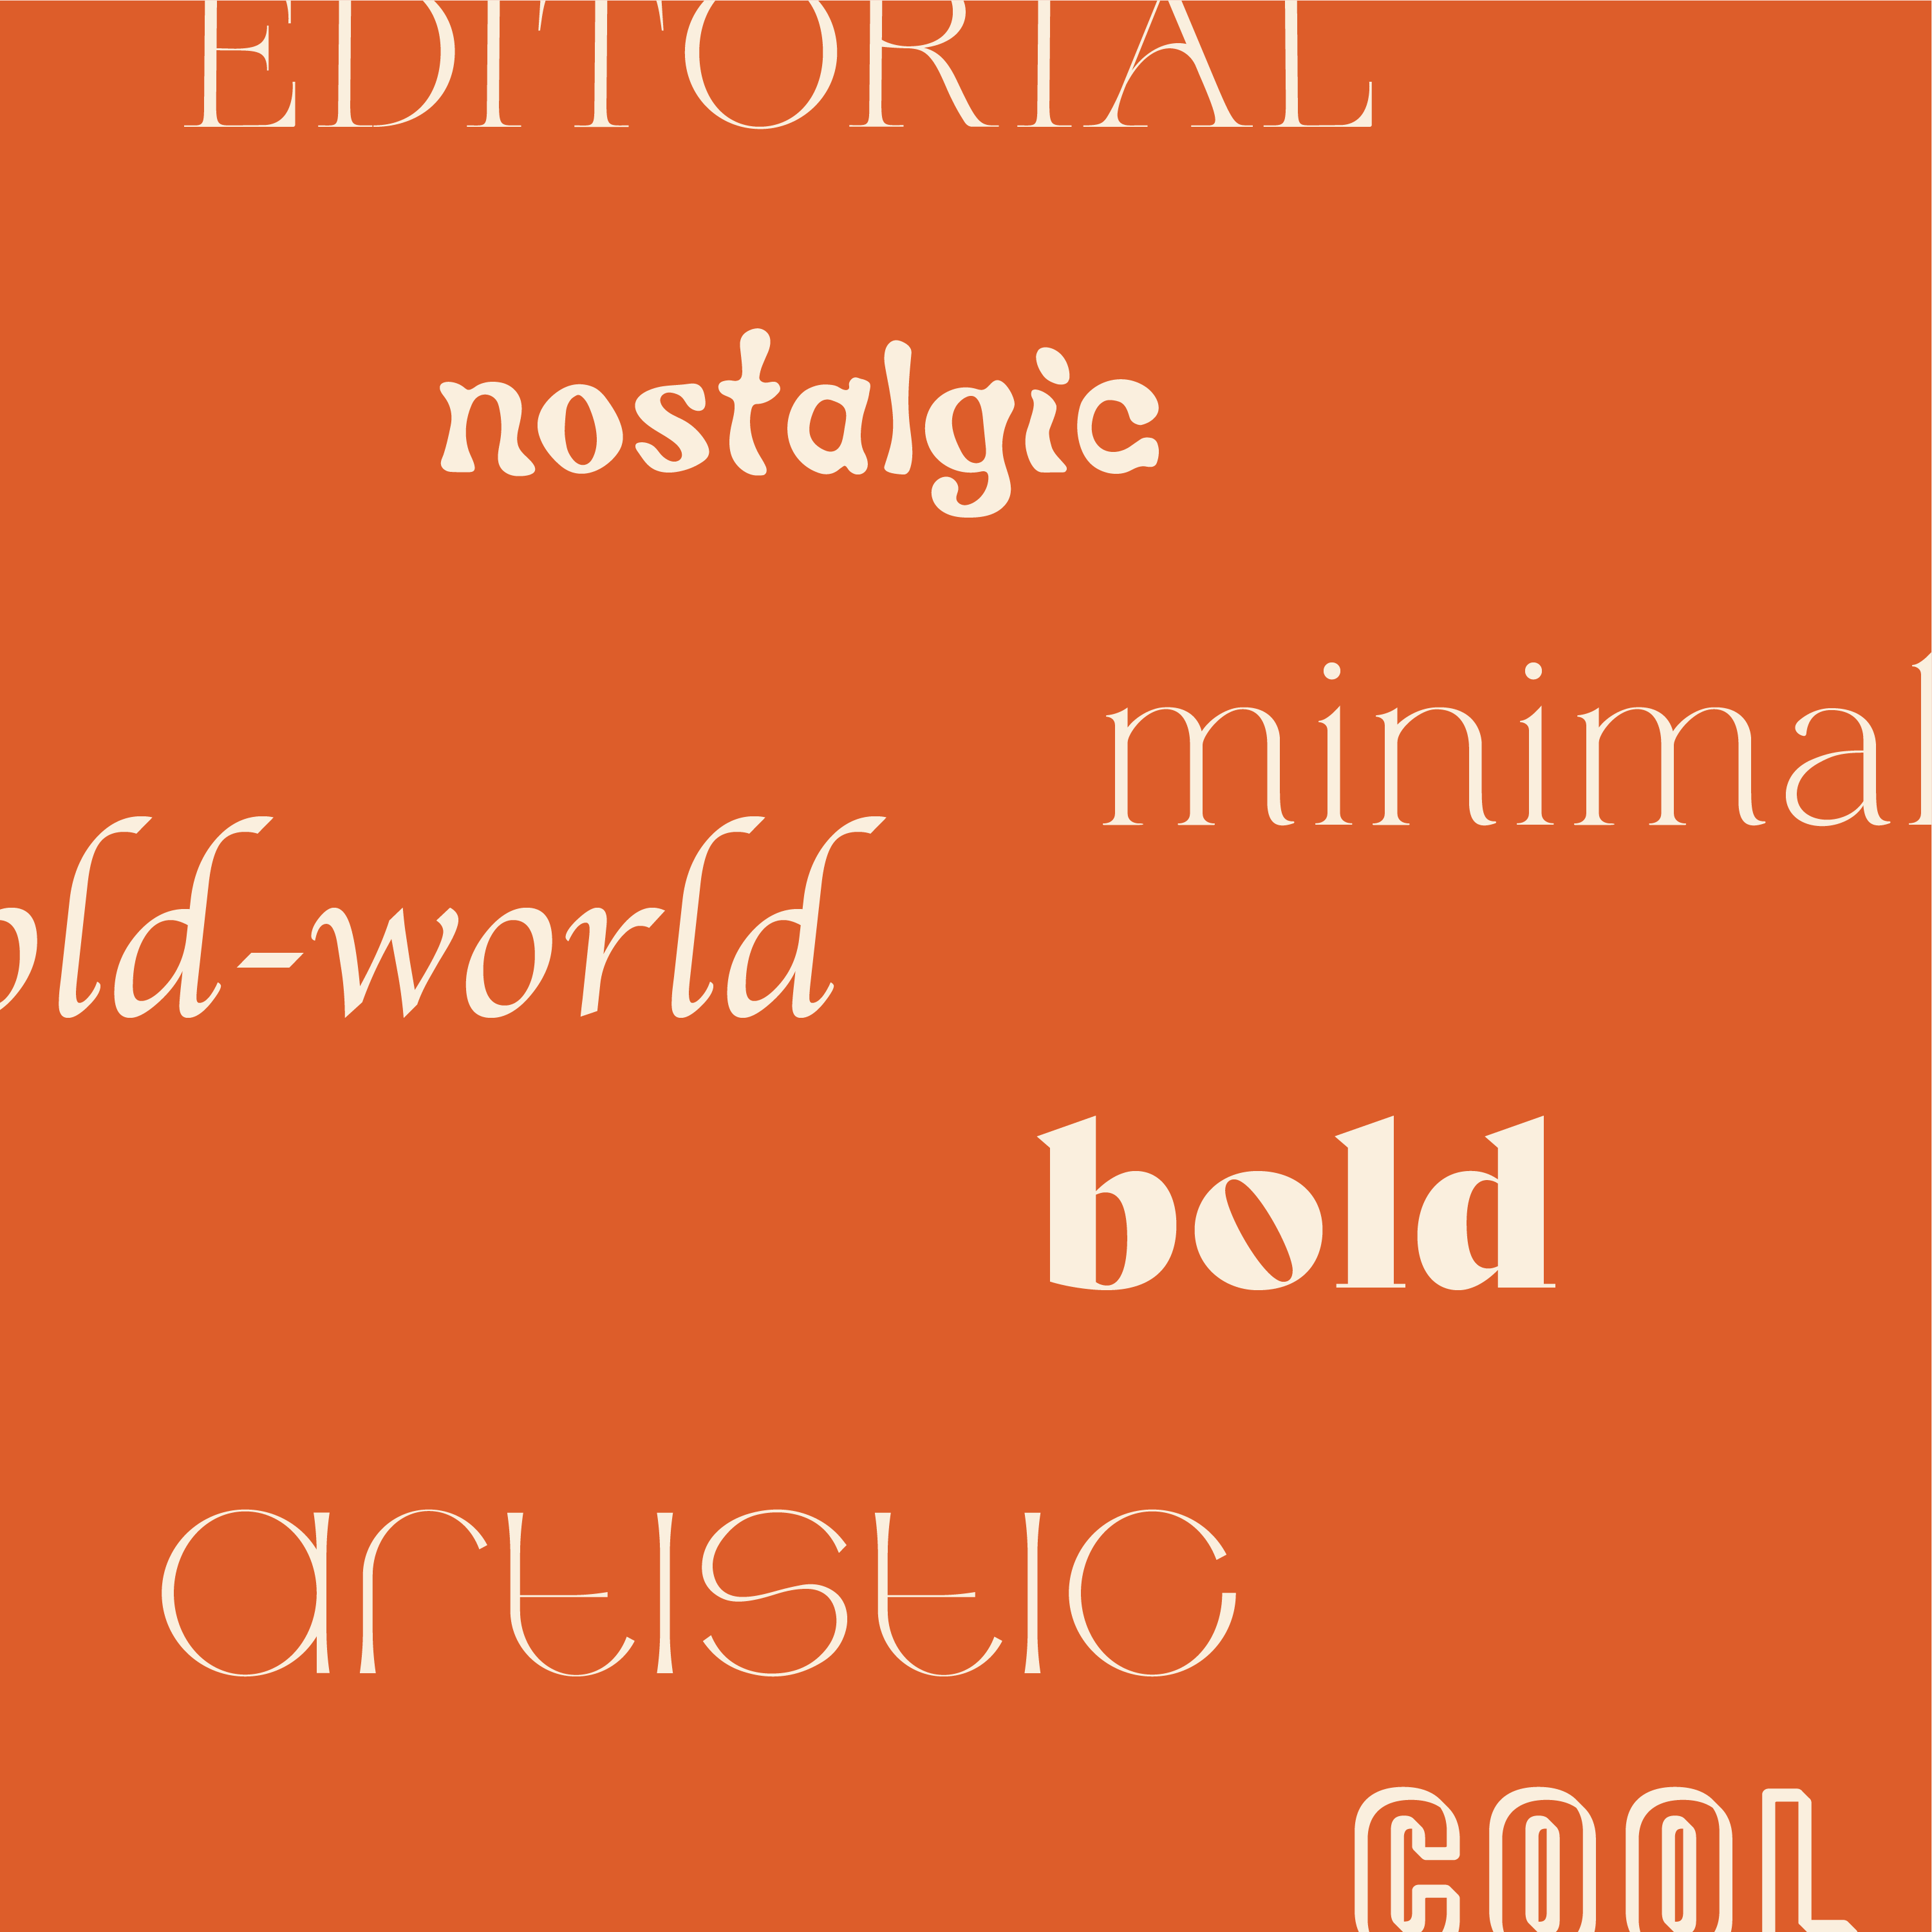 How to make your website feel custom, website fonts, good website fonts, how to make your website fonts look good, The Blog Stop